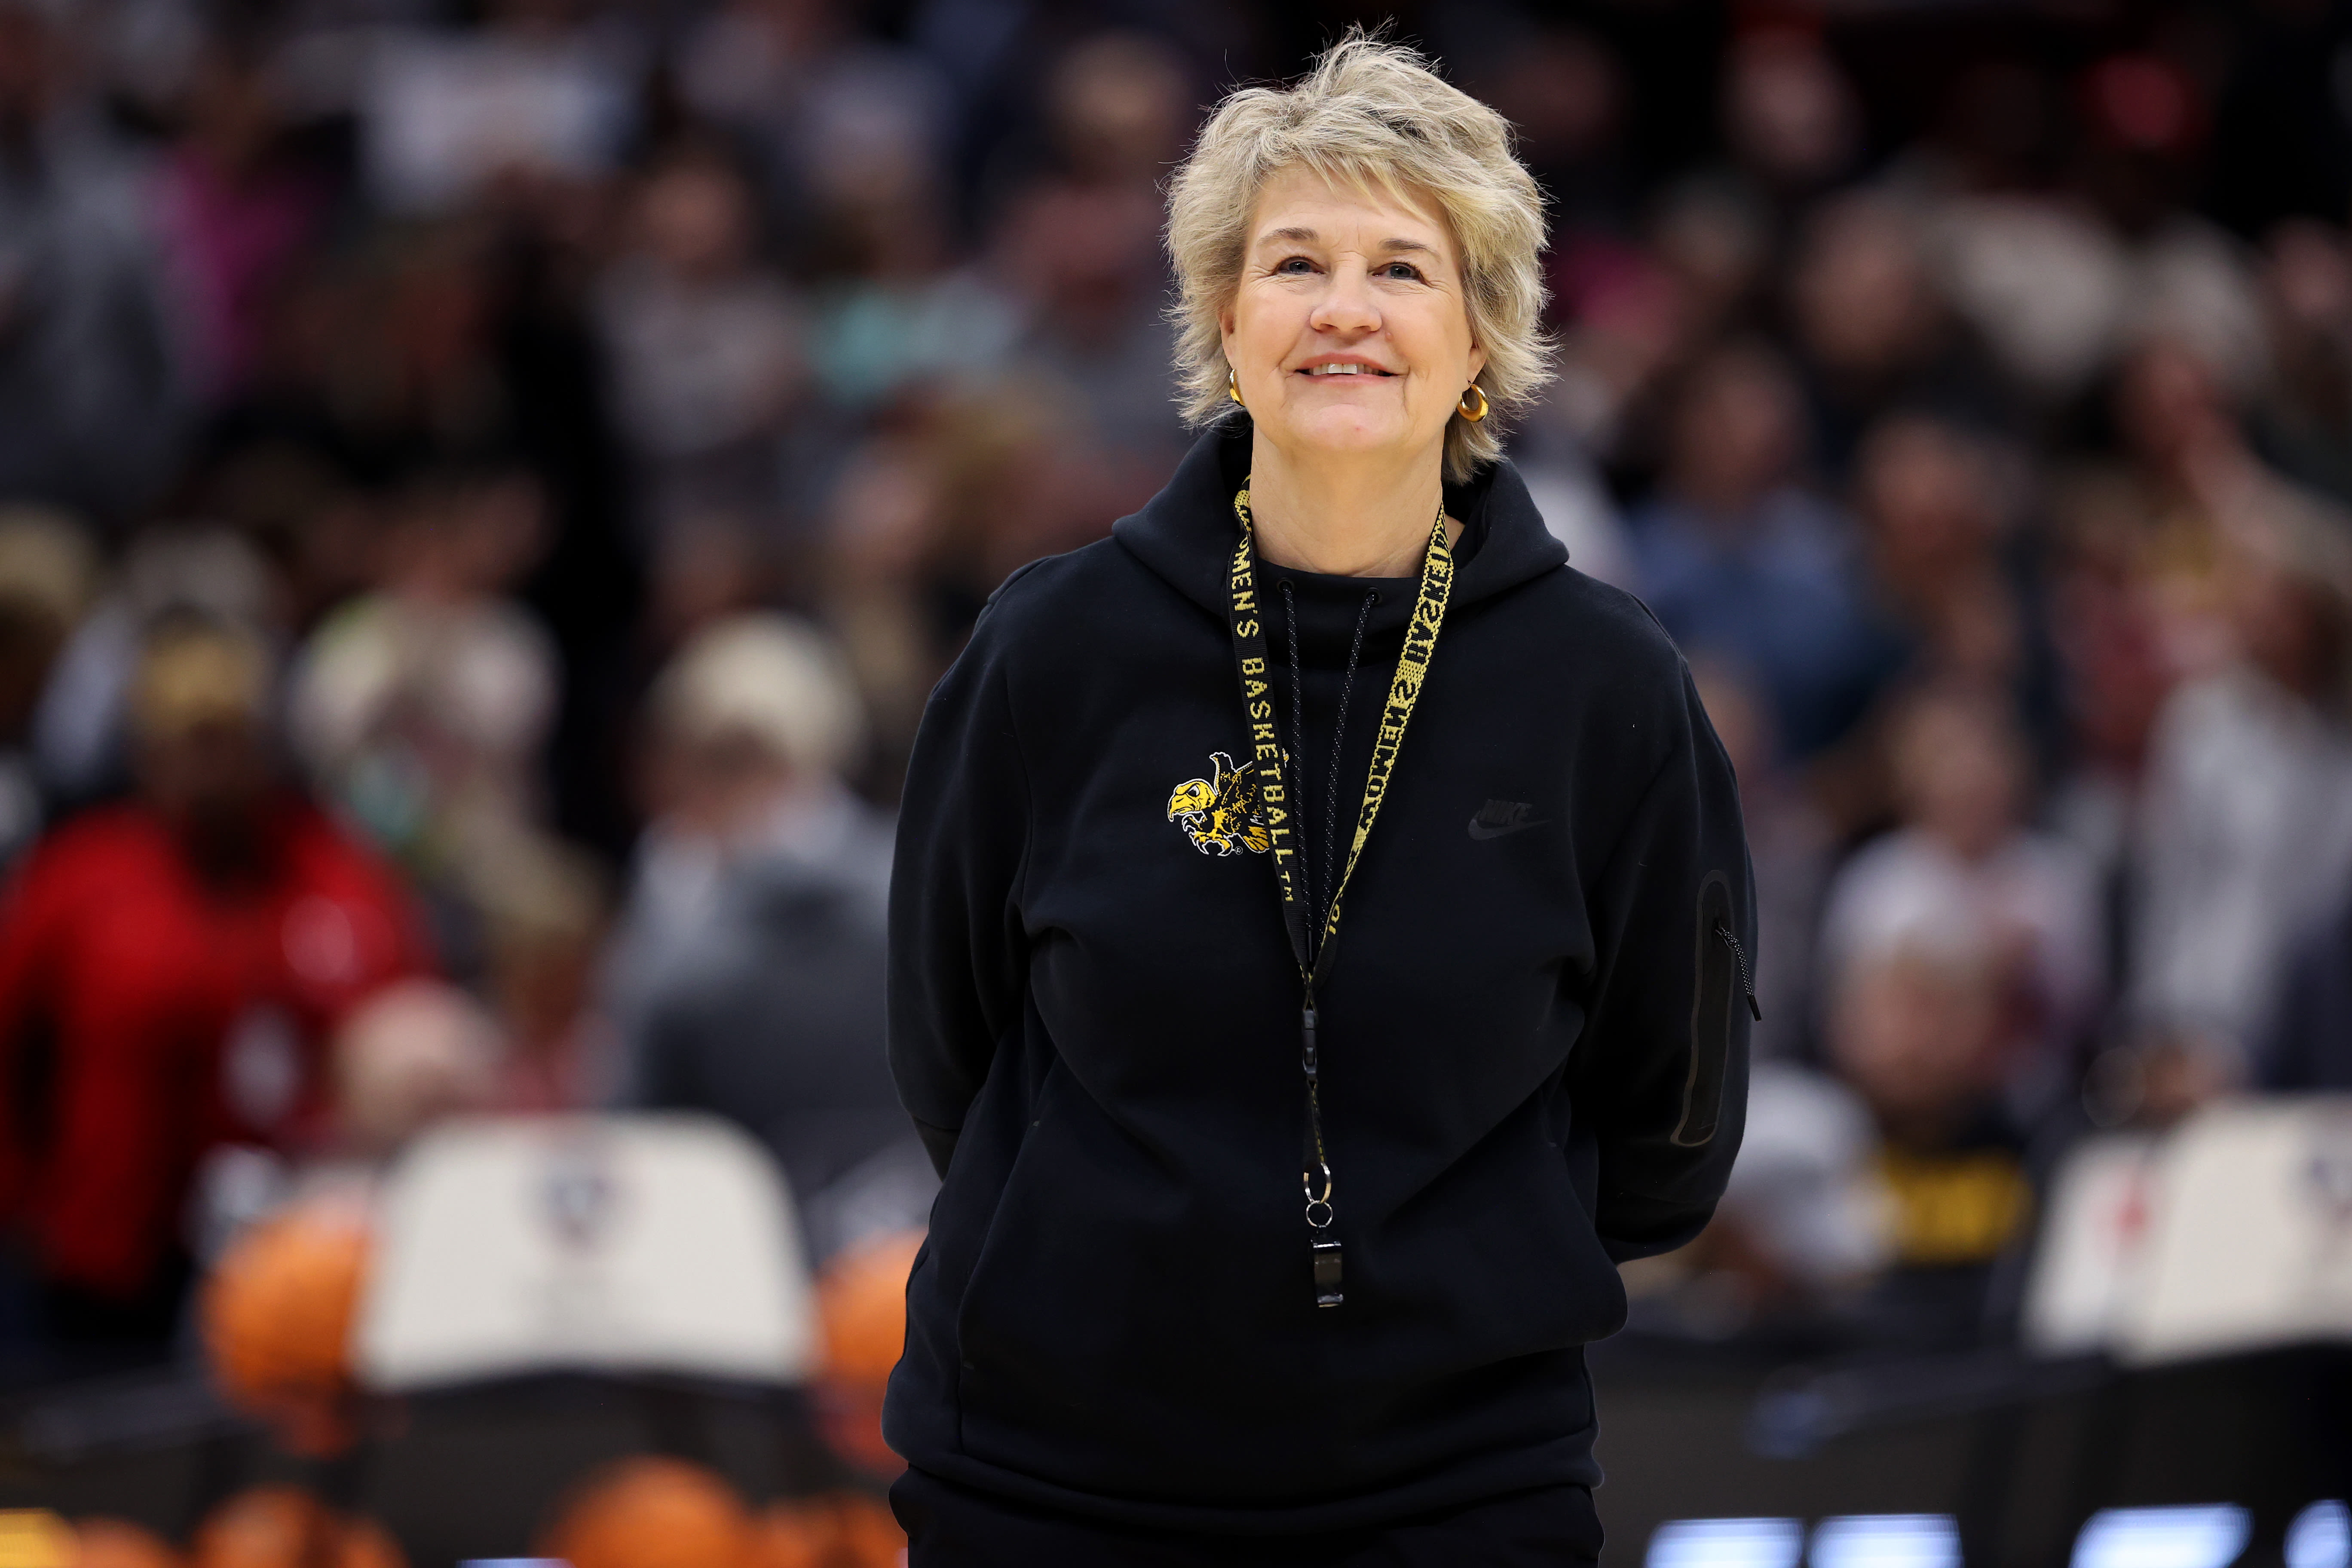 Iowa coach Lisa Bluder retires after Caitlin Clark's departure; longtime assistant Jan Jensen to take over